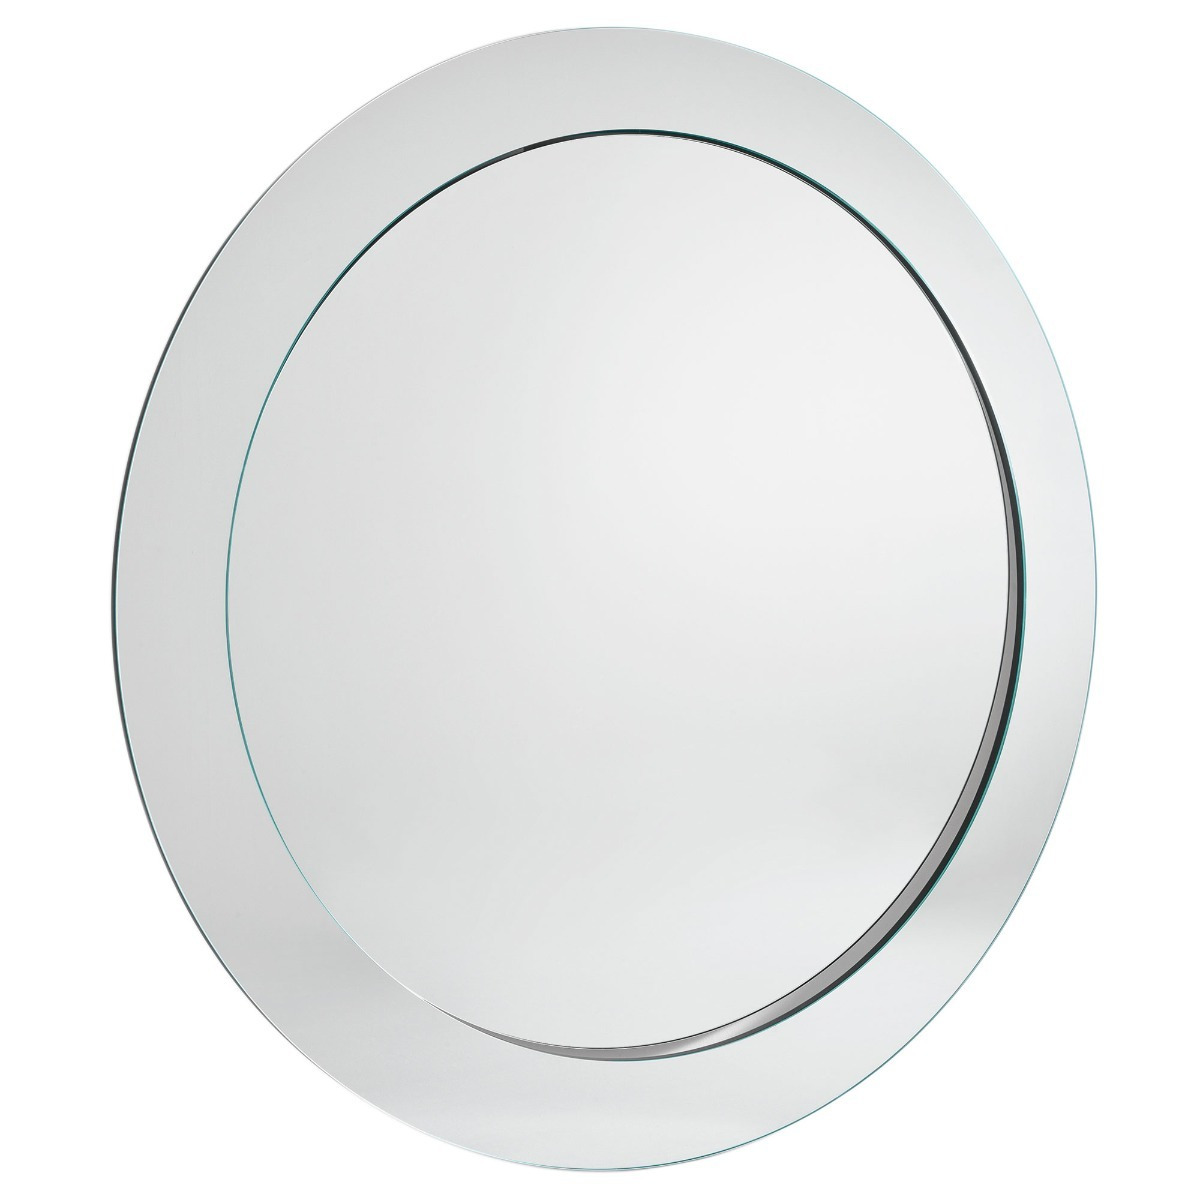 Tonelli Gerundio Circular Floor Mirror, Round, White Glass - Barker & Stonehouse - image 1